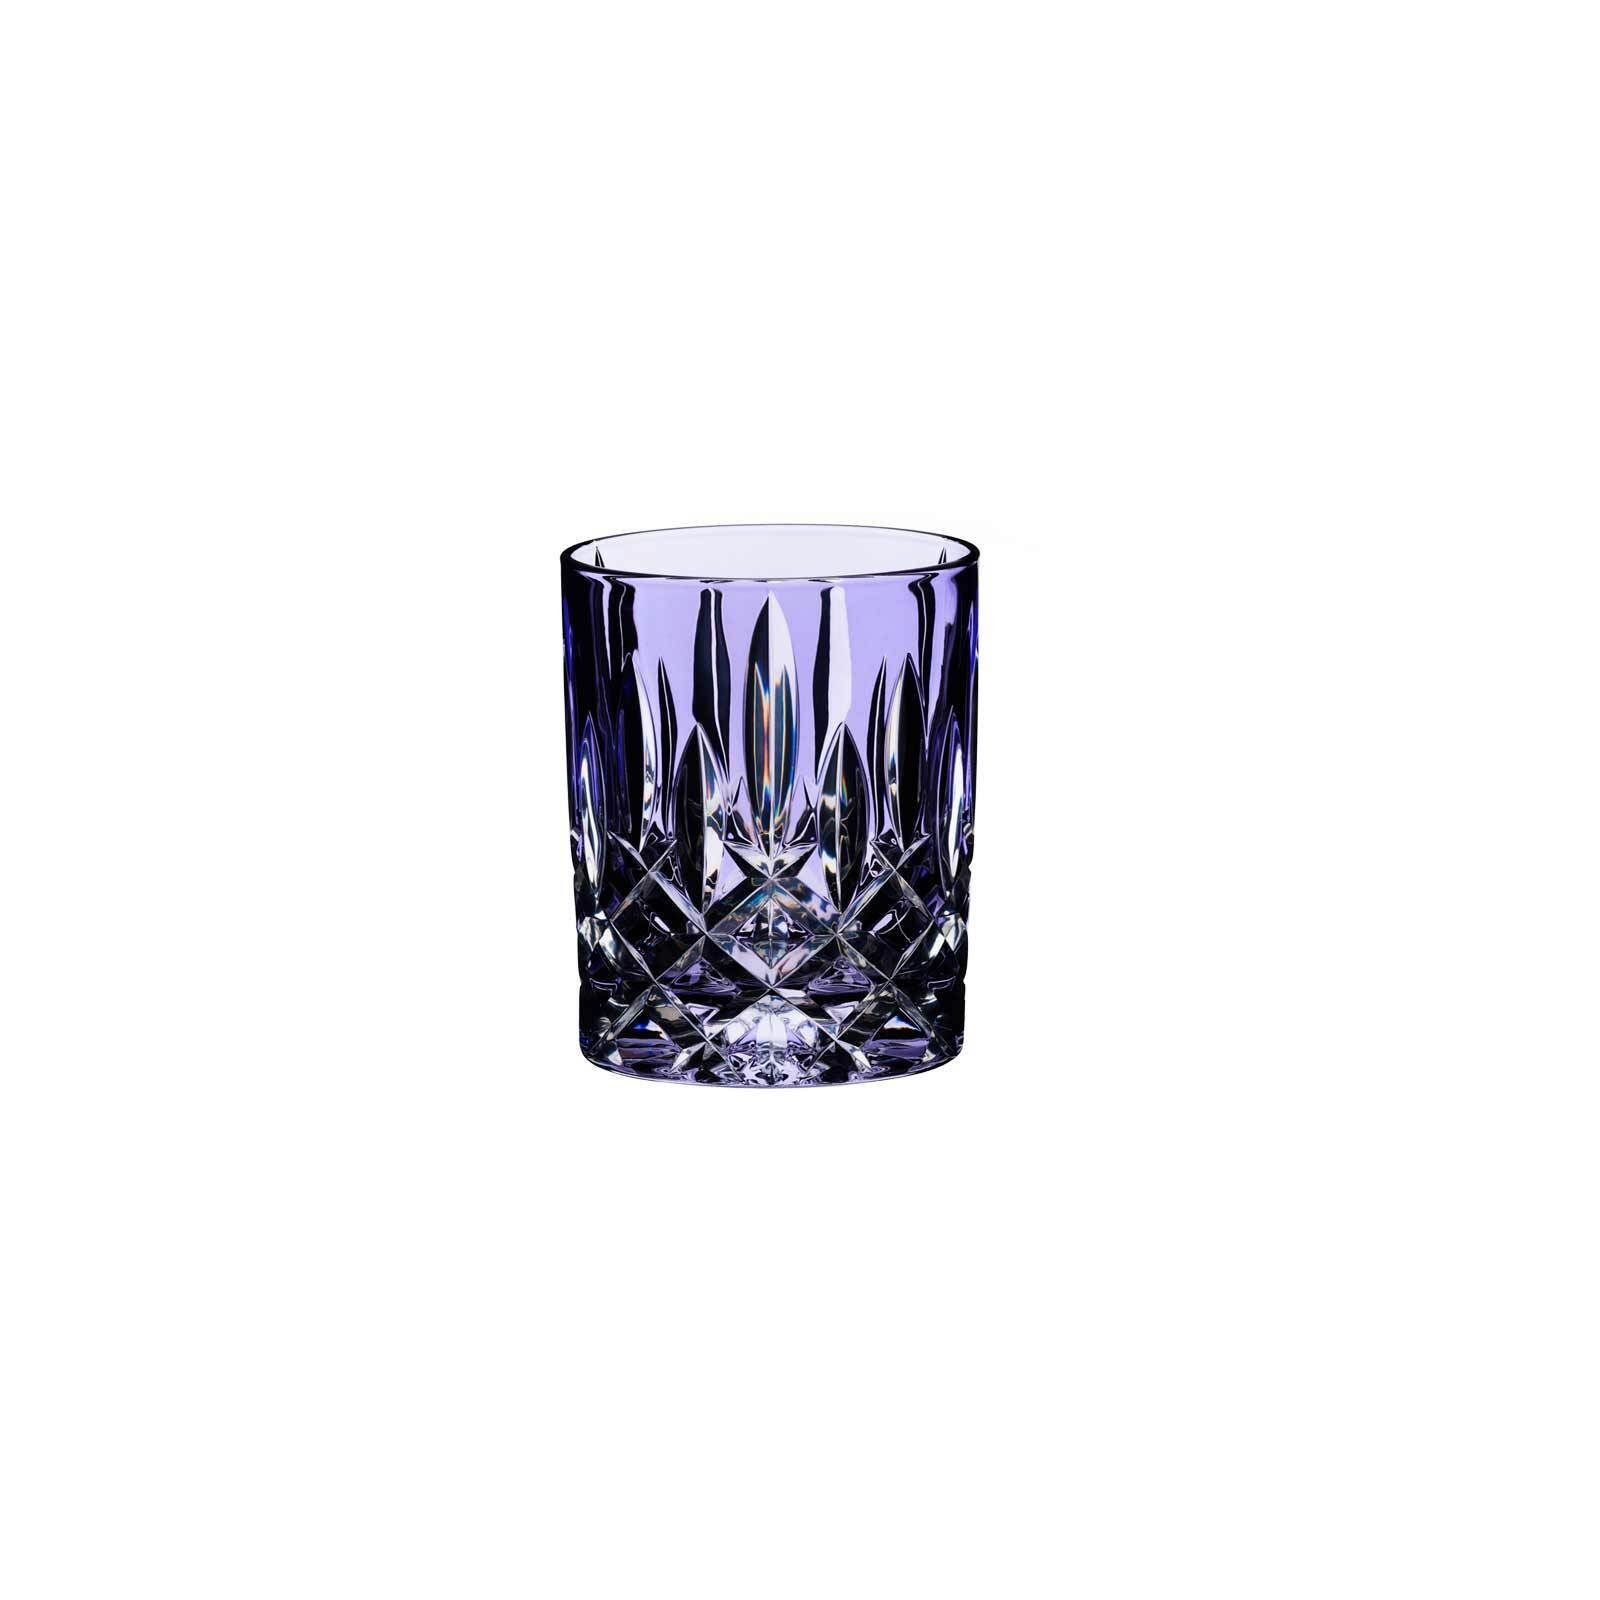 Whiskyglas Glas RIEDEL ml, Glas Whiskyglas Violett 295 Laudon